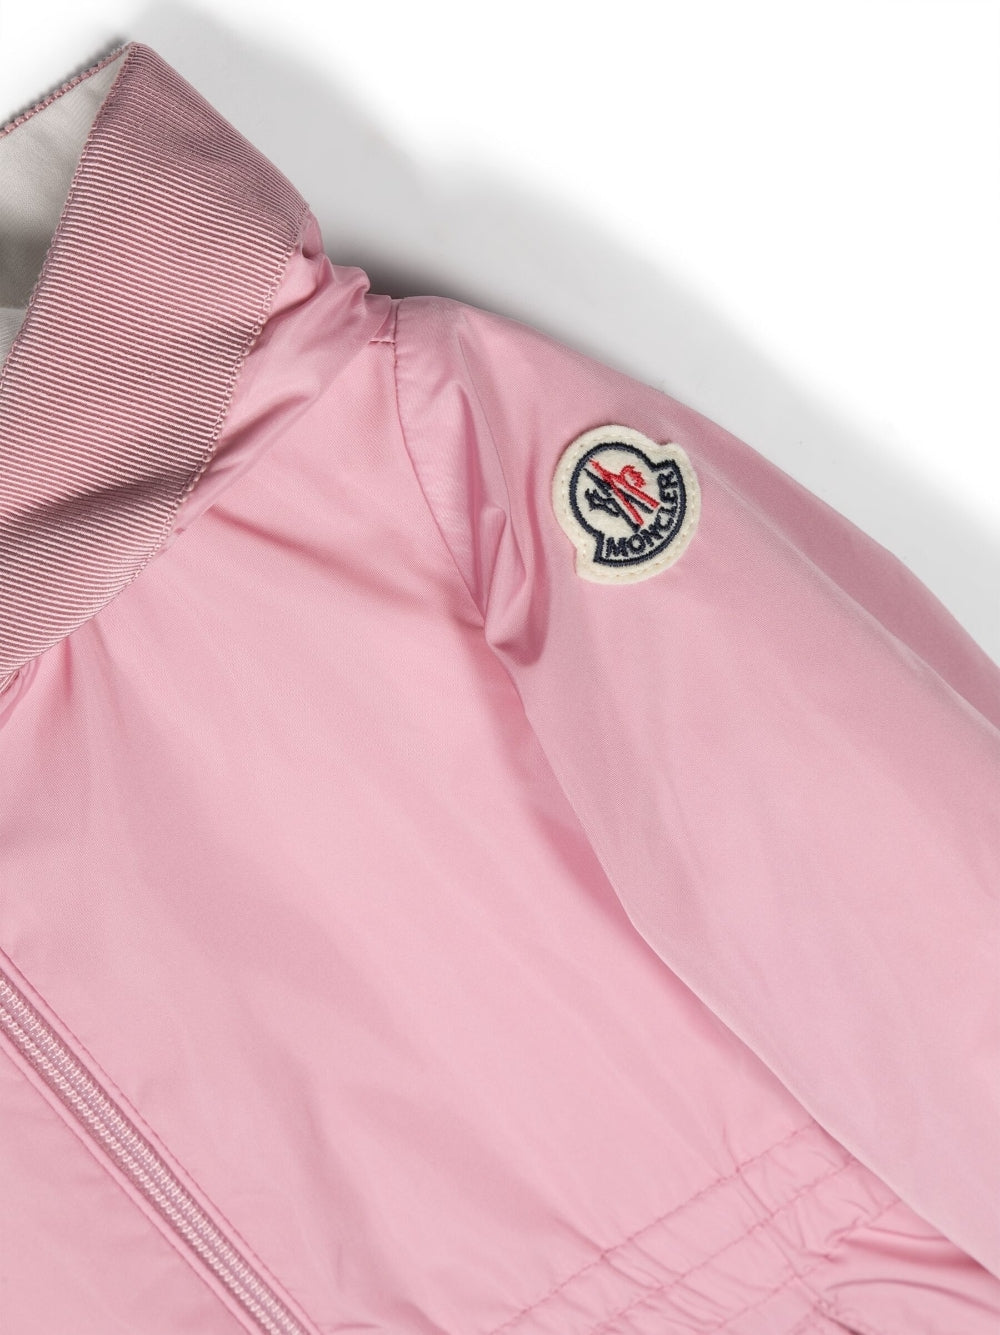 Pink Messein hooded rain jacket